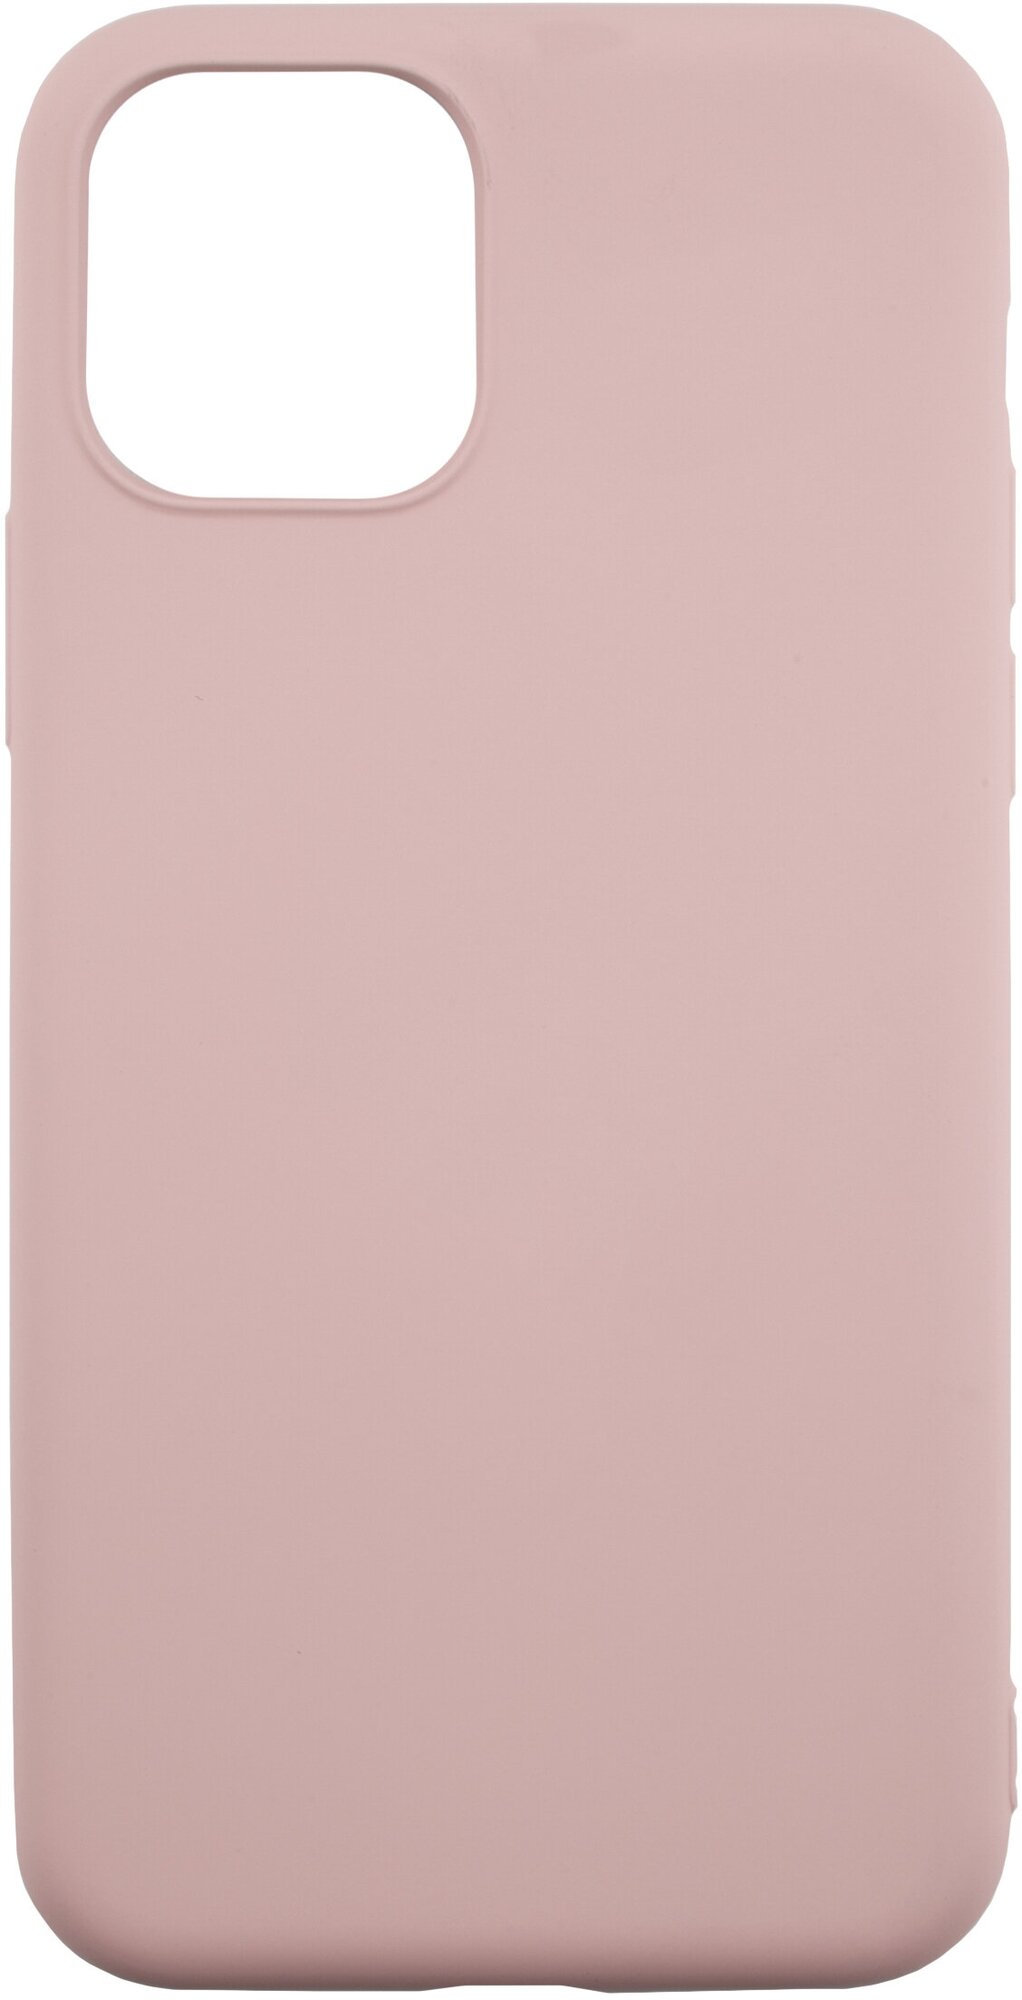 Накладка на iPhone 11 Pro Max (6.5")/Силиконовый чехол для Apple/Бампер на Айфон 11 Про Макс (6.5")/Защита от царапин/Чехол накладка, розовый песок